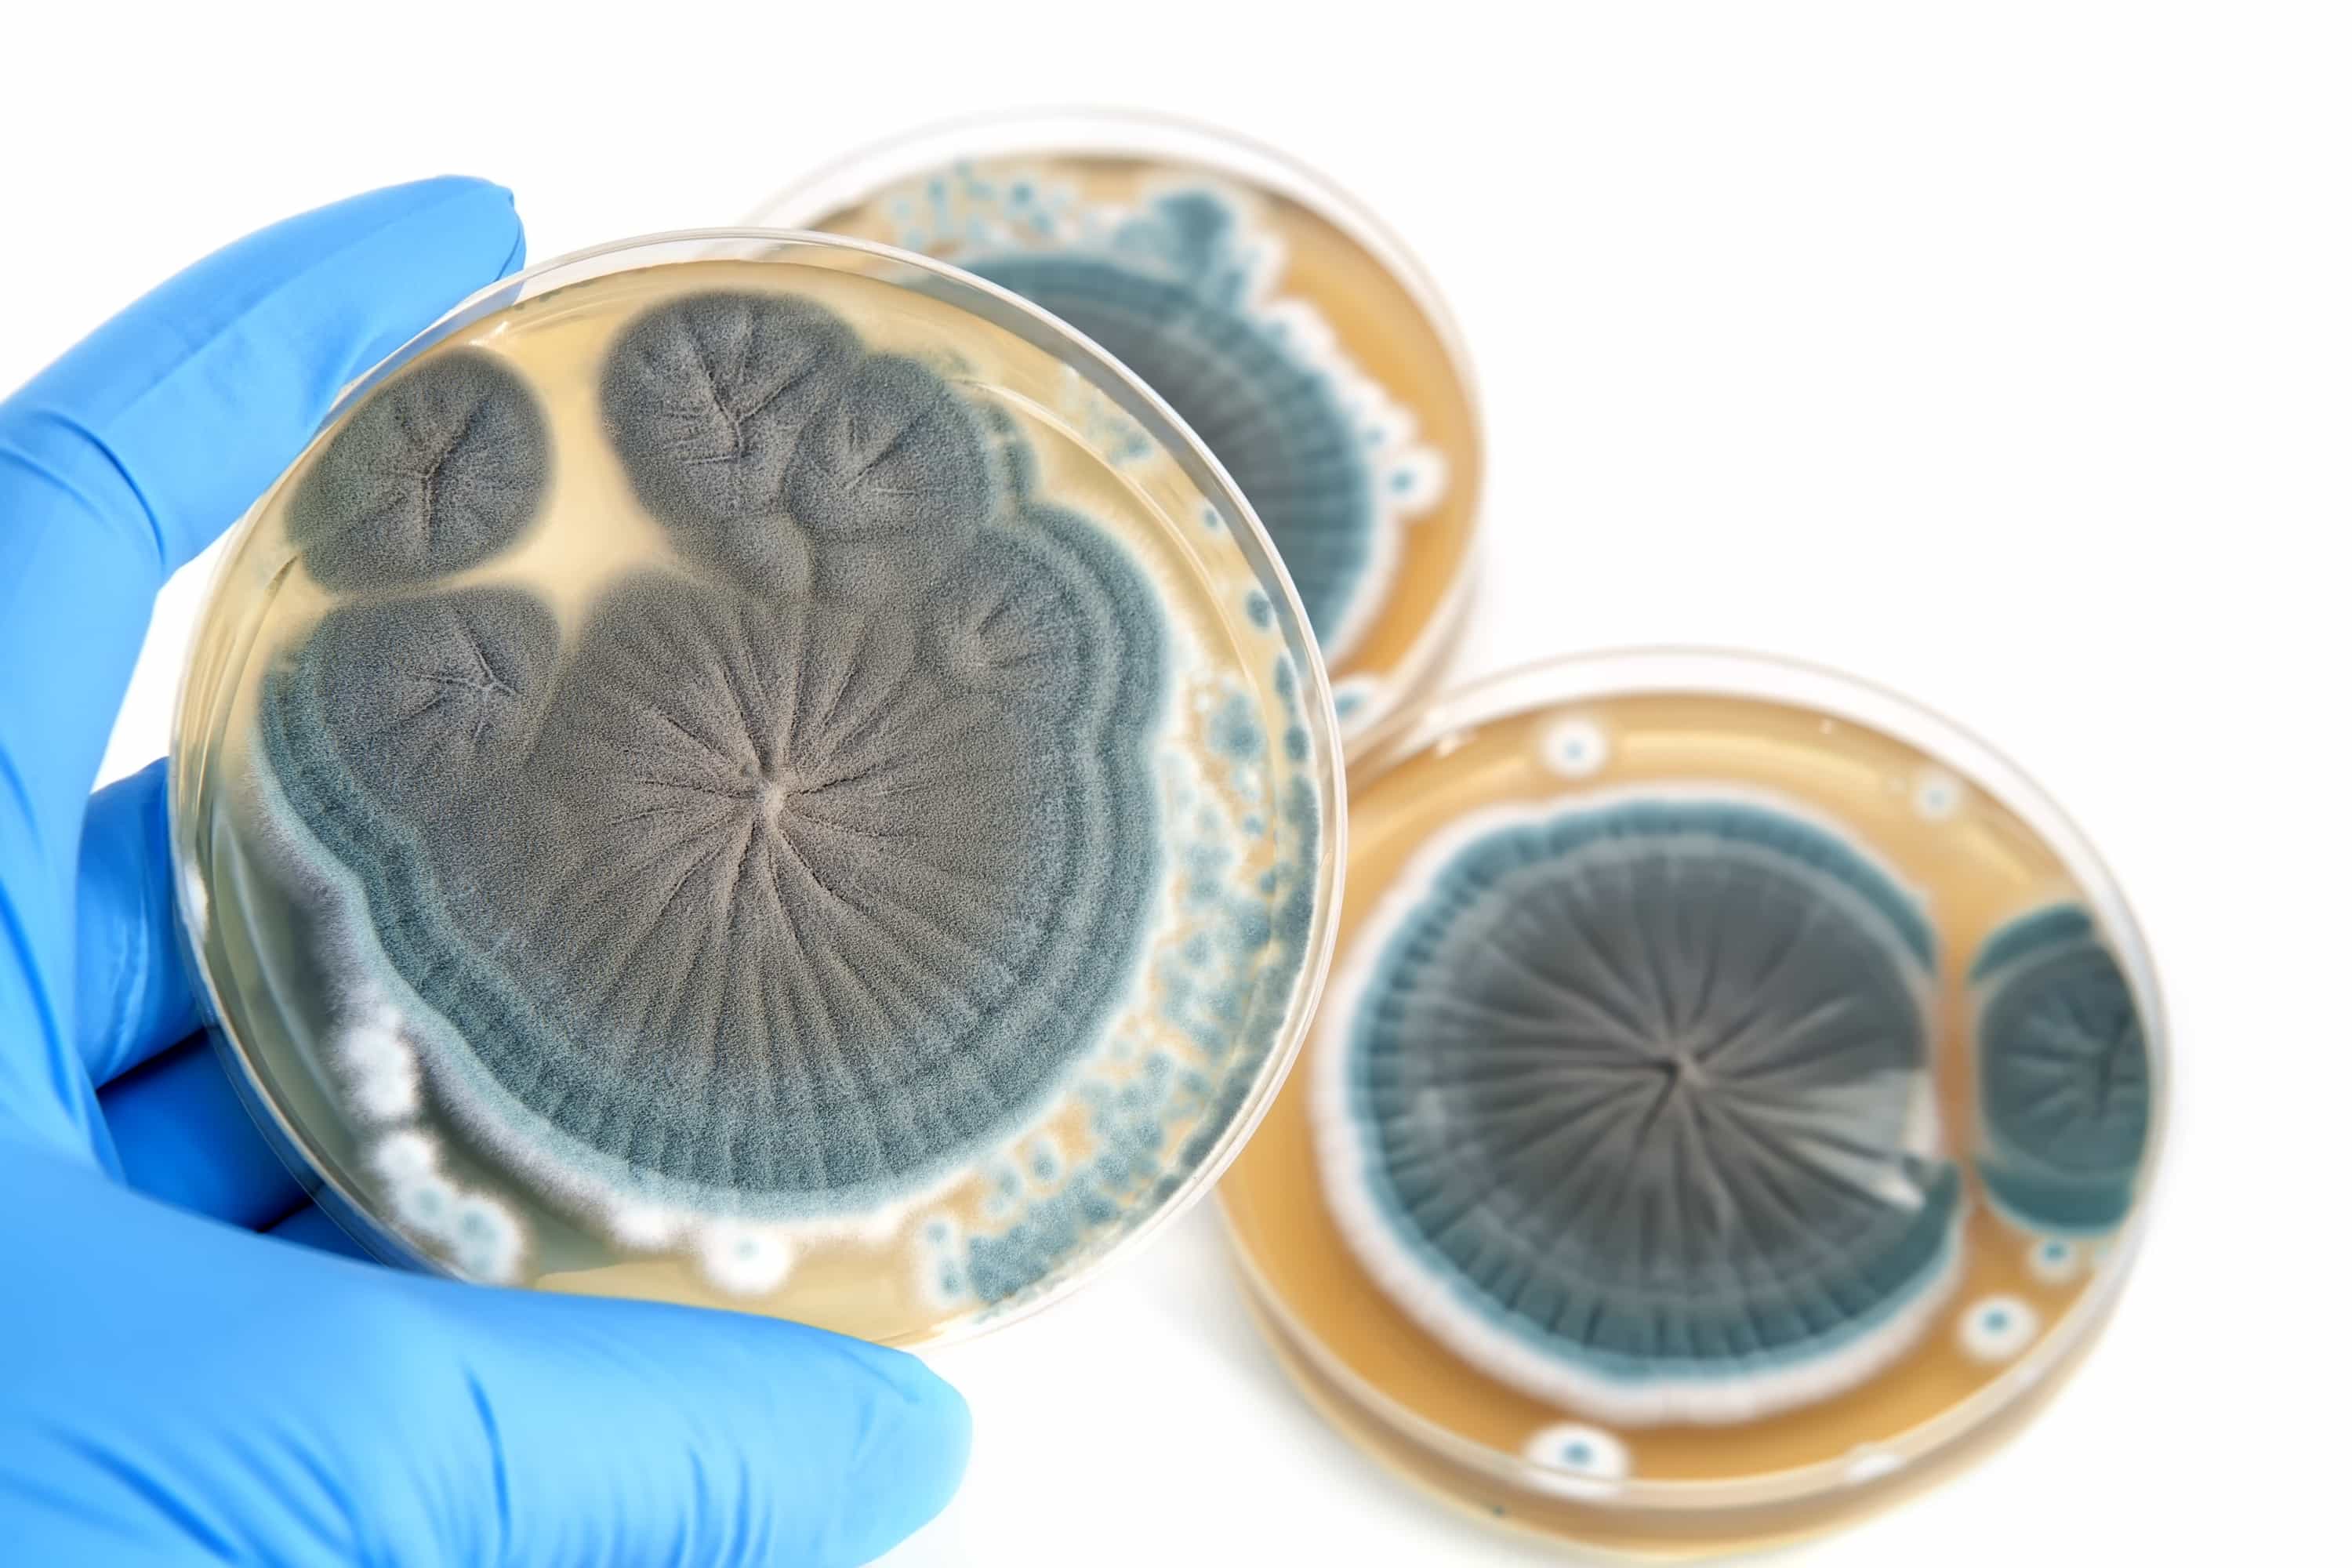 Testing for Penicillium fungi using an agar plate